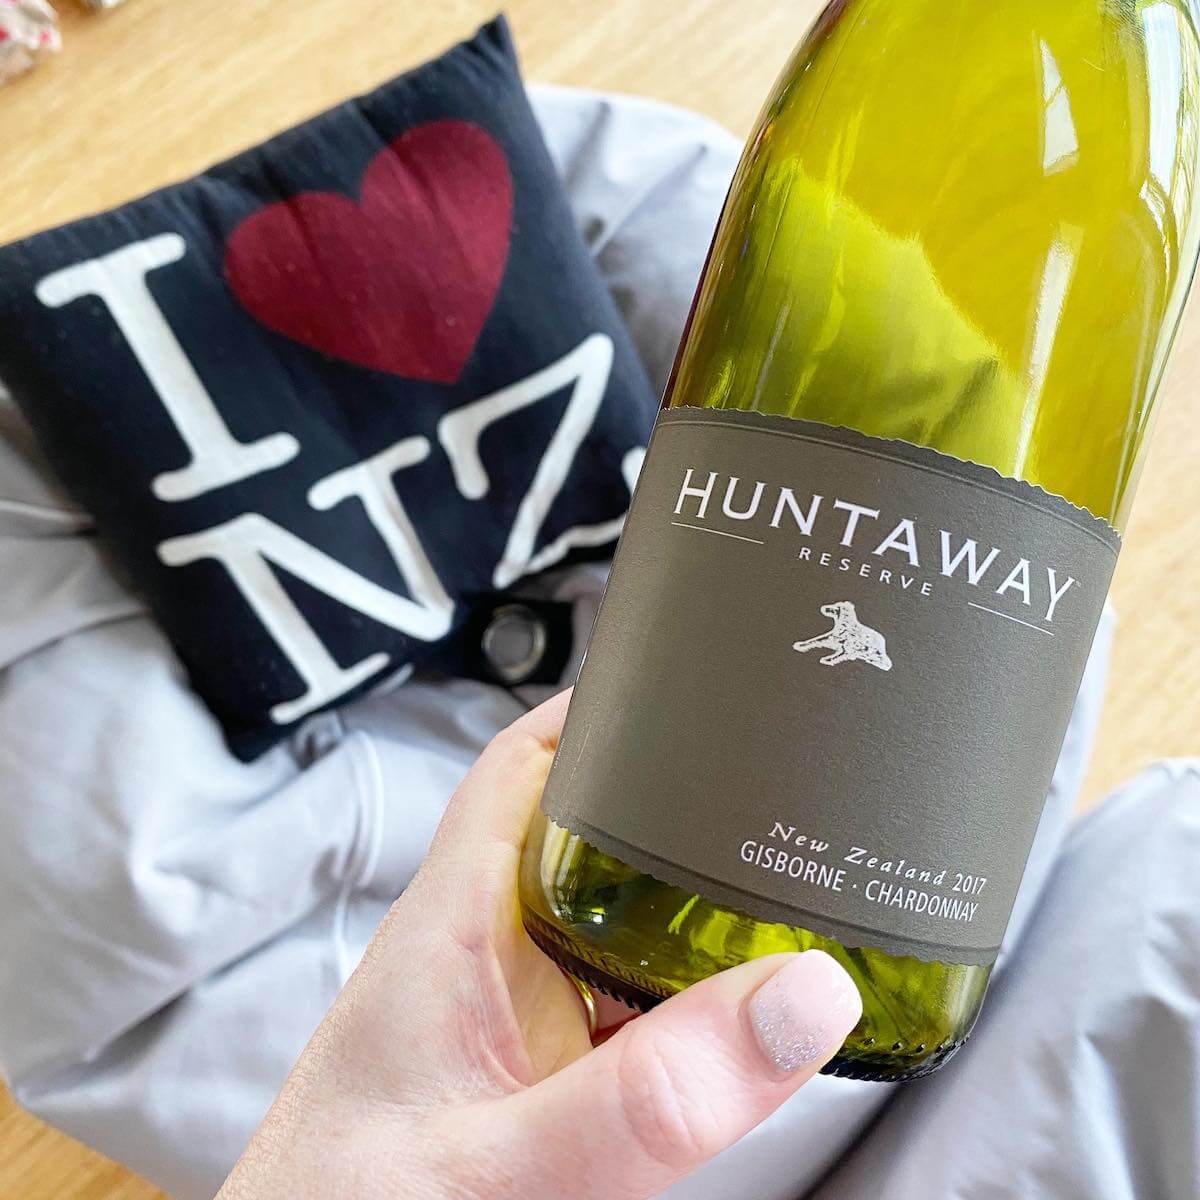 Huntaway Reserve 2017 Chardonnay - New Zealand